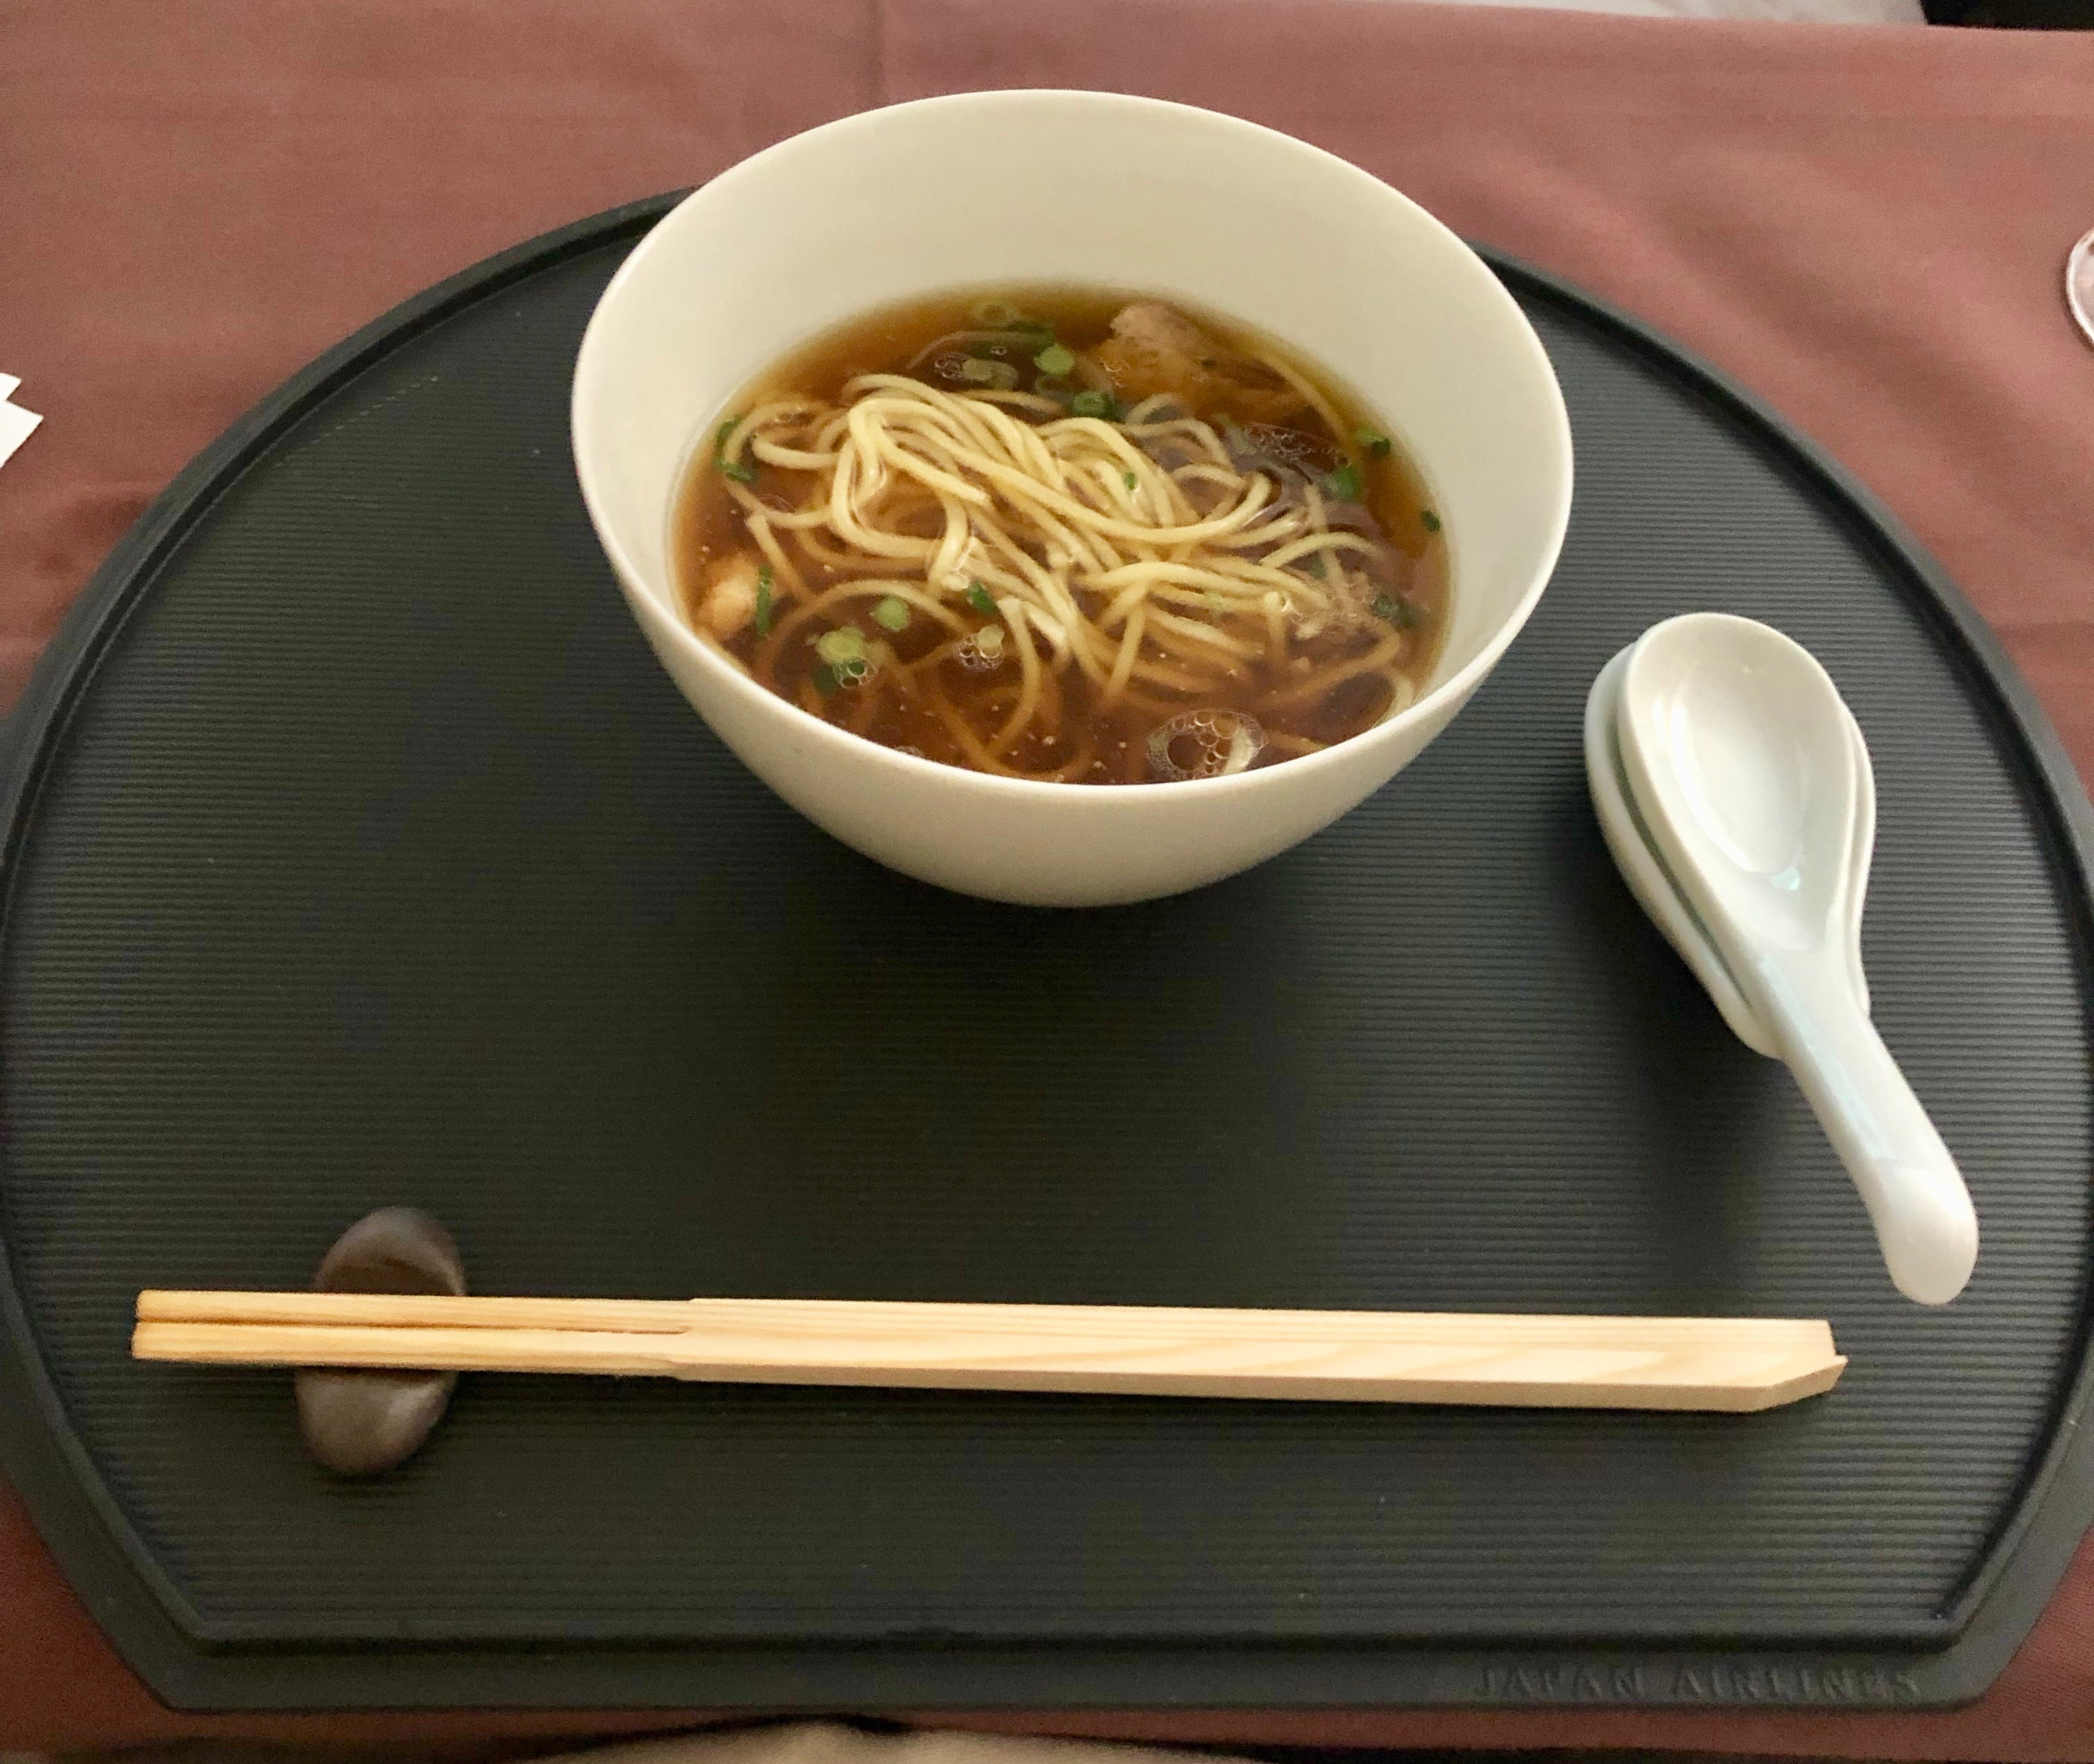 JAL original "Japanese soba noodles tsuta" ramen noodles in soy sauce soup